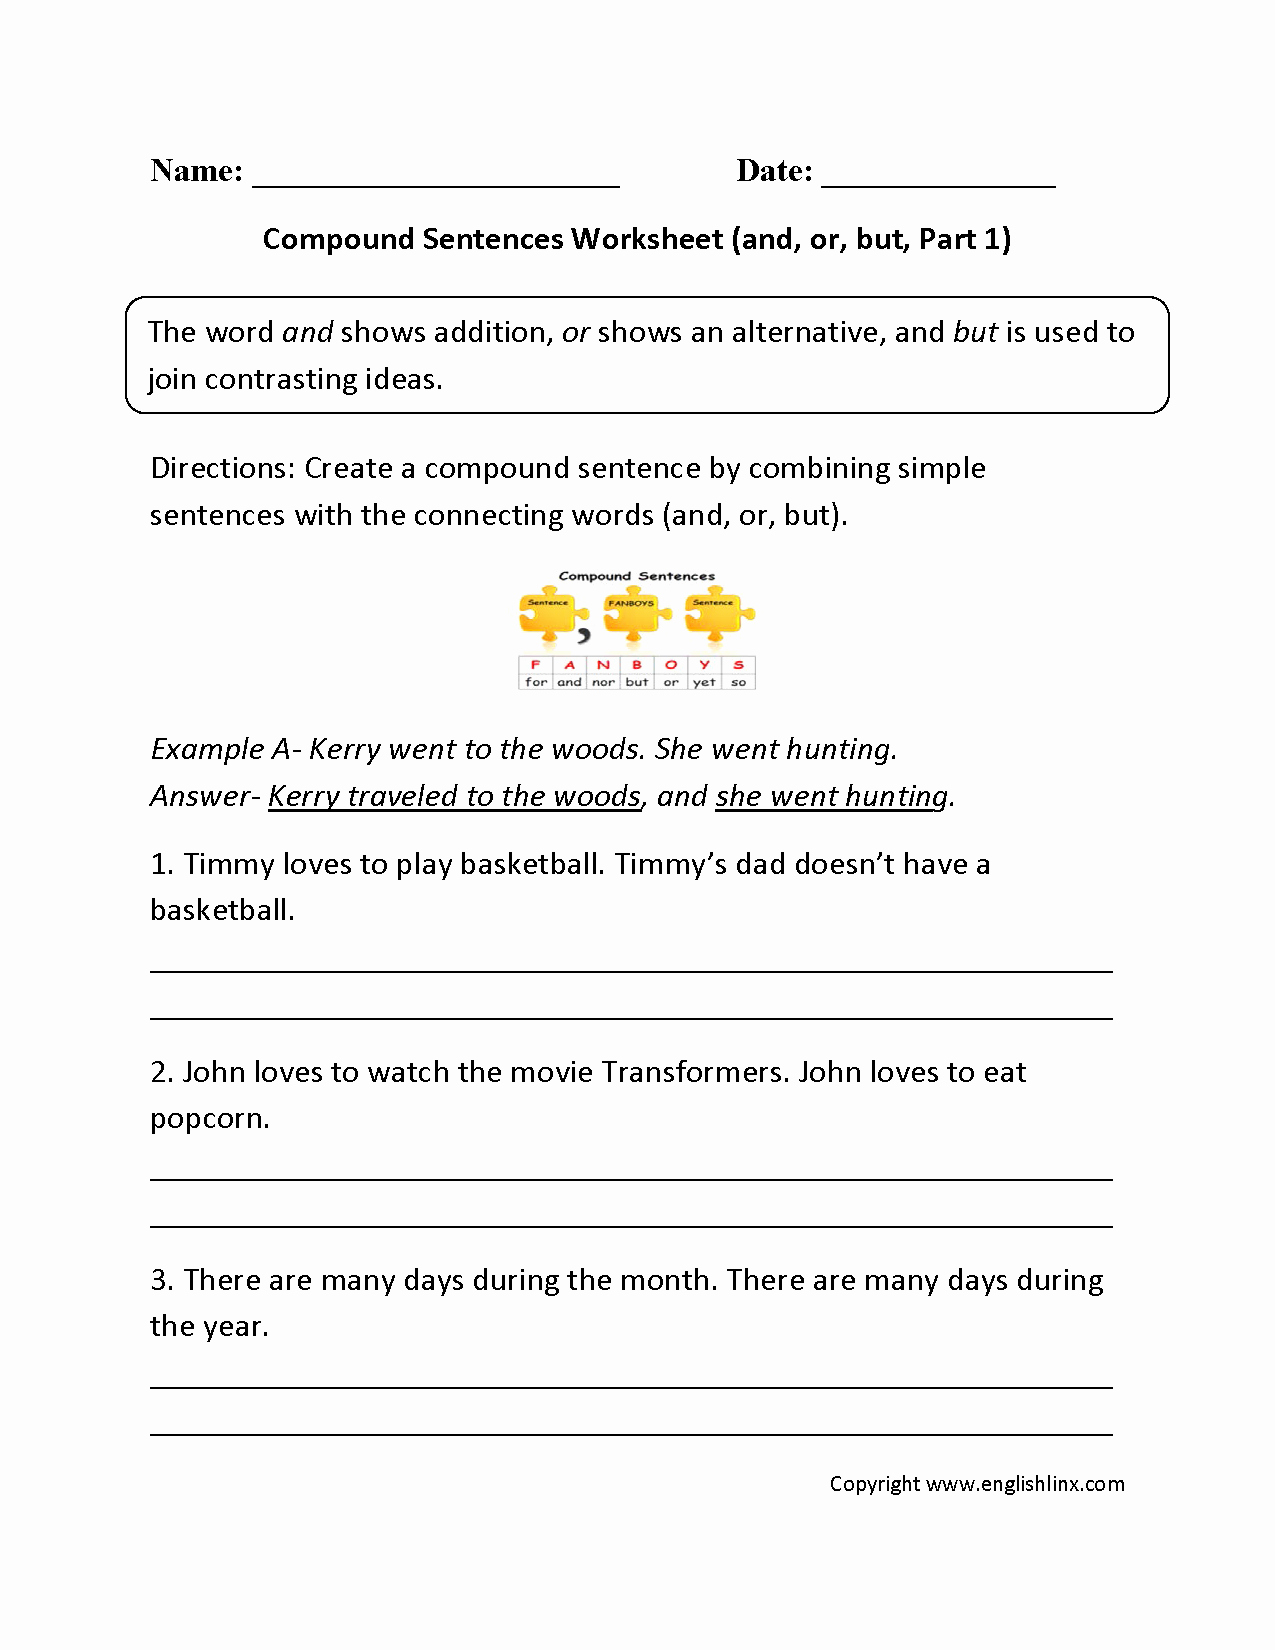 Compound Sentences Worksheet Pdf Luxury Englishlinx